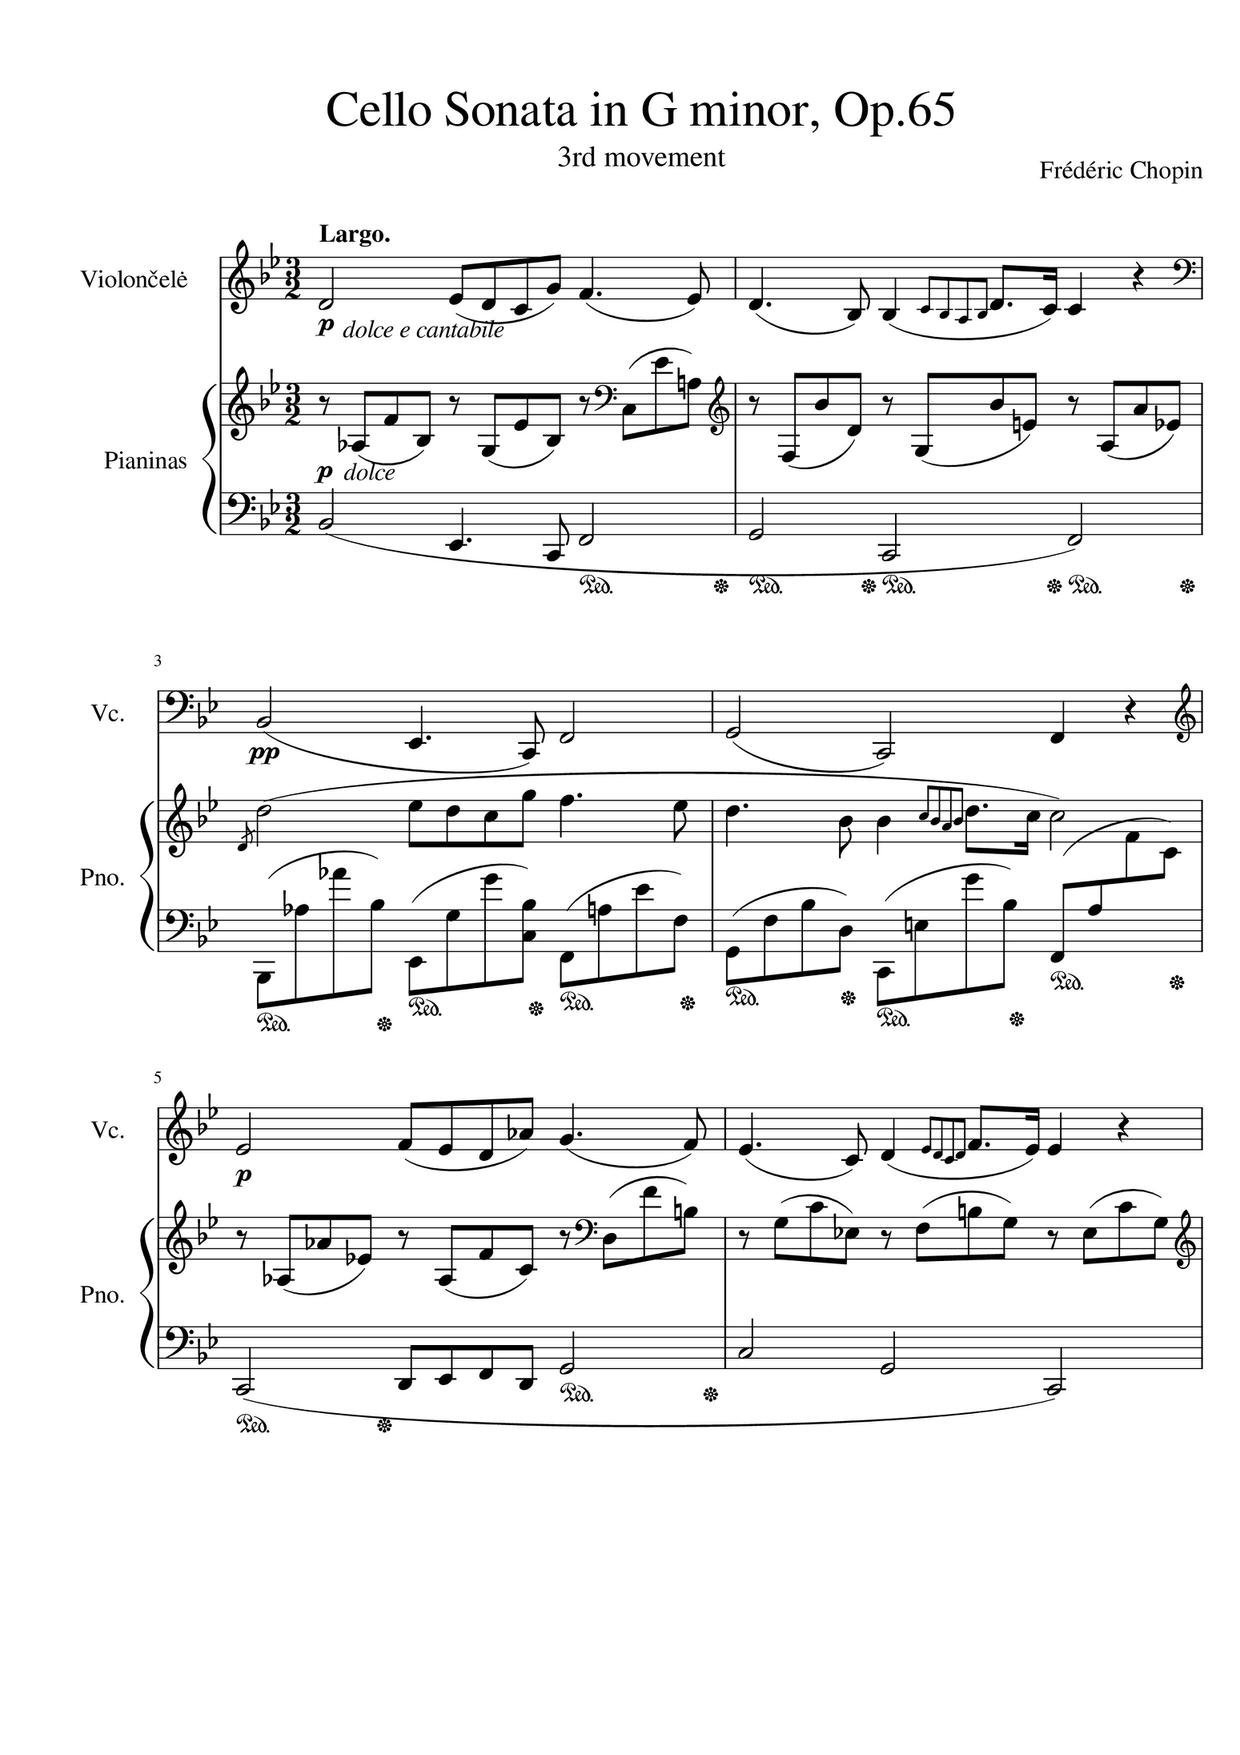 Cello Sonata in G Minor, Op. 65: III. Largo琴譜